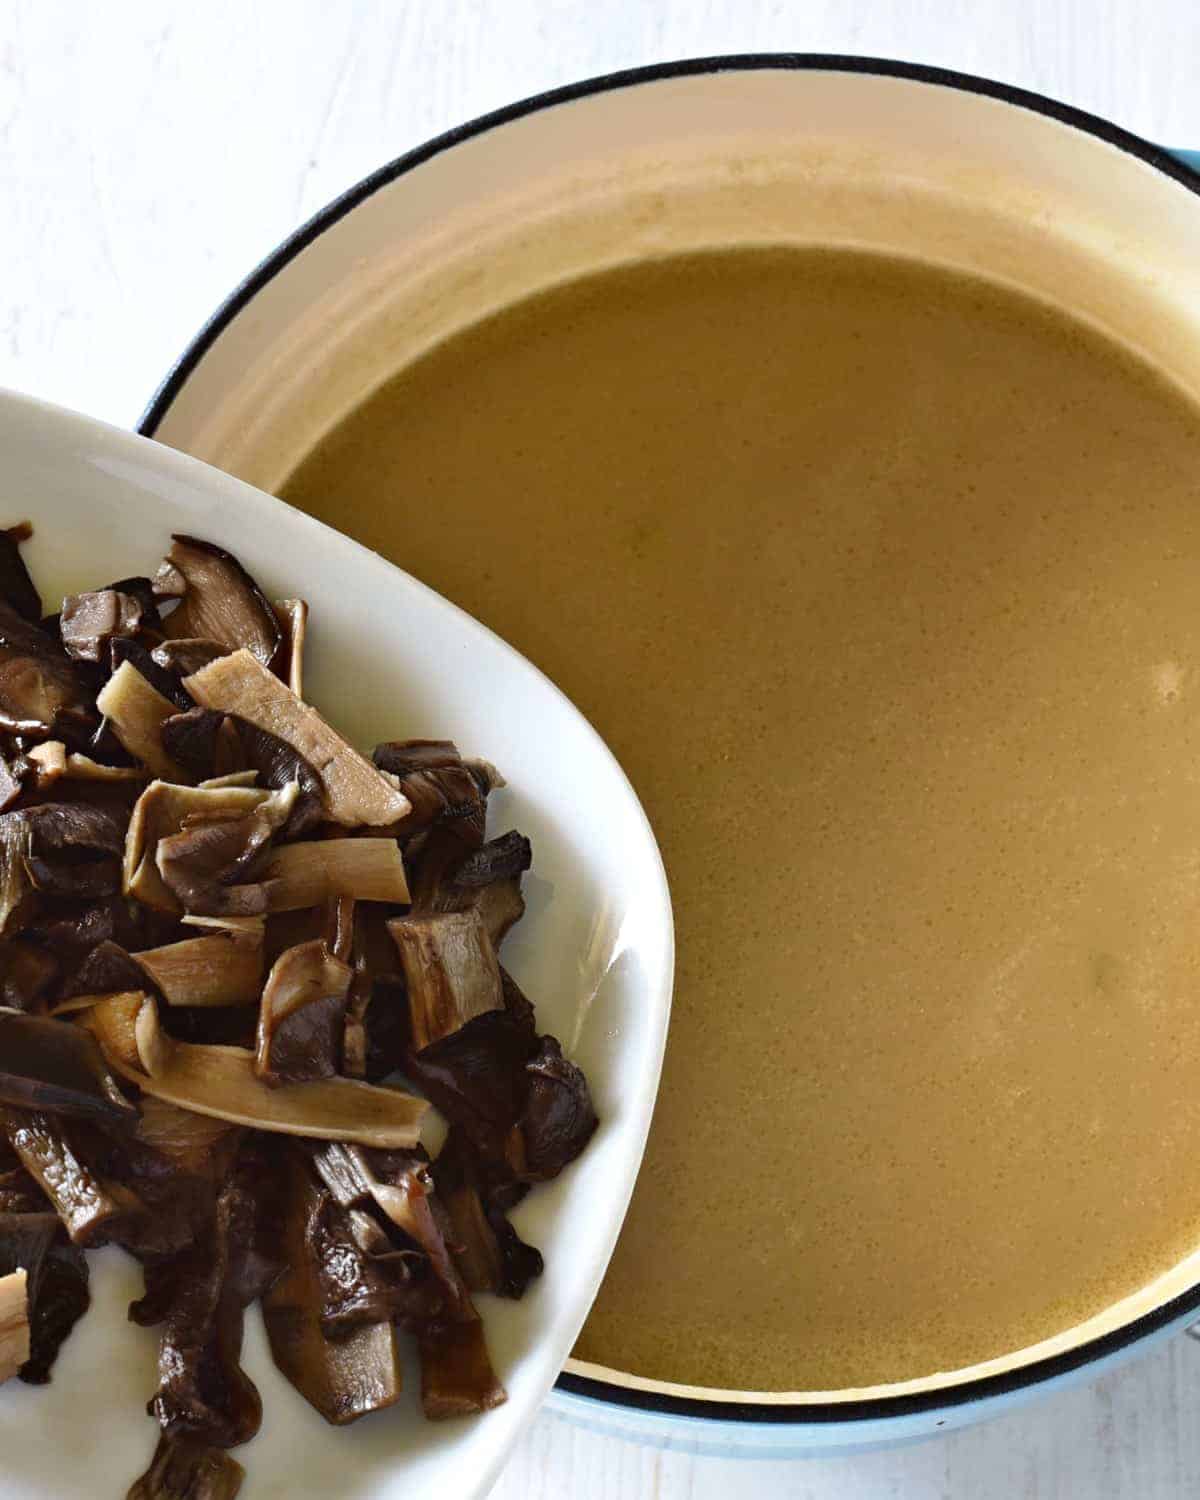 adding mushrooms to kulajda soup